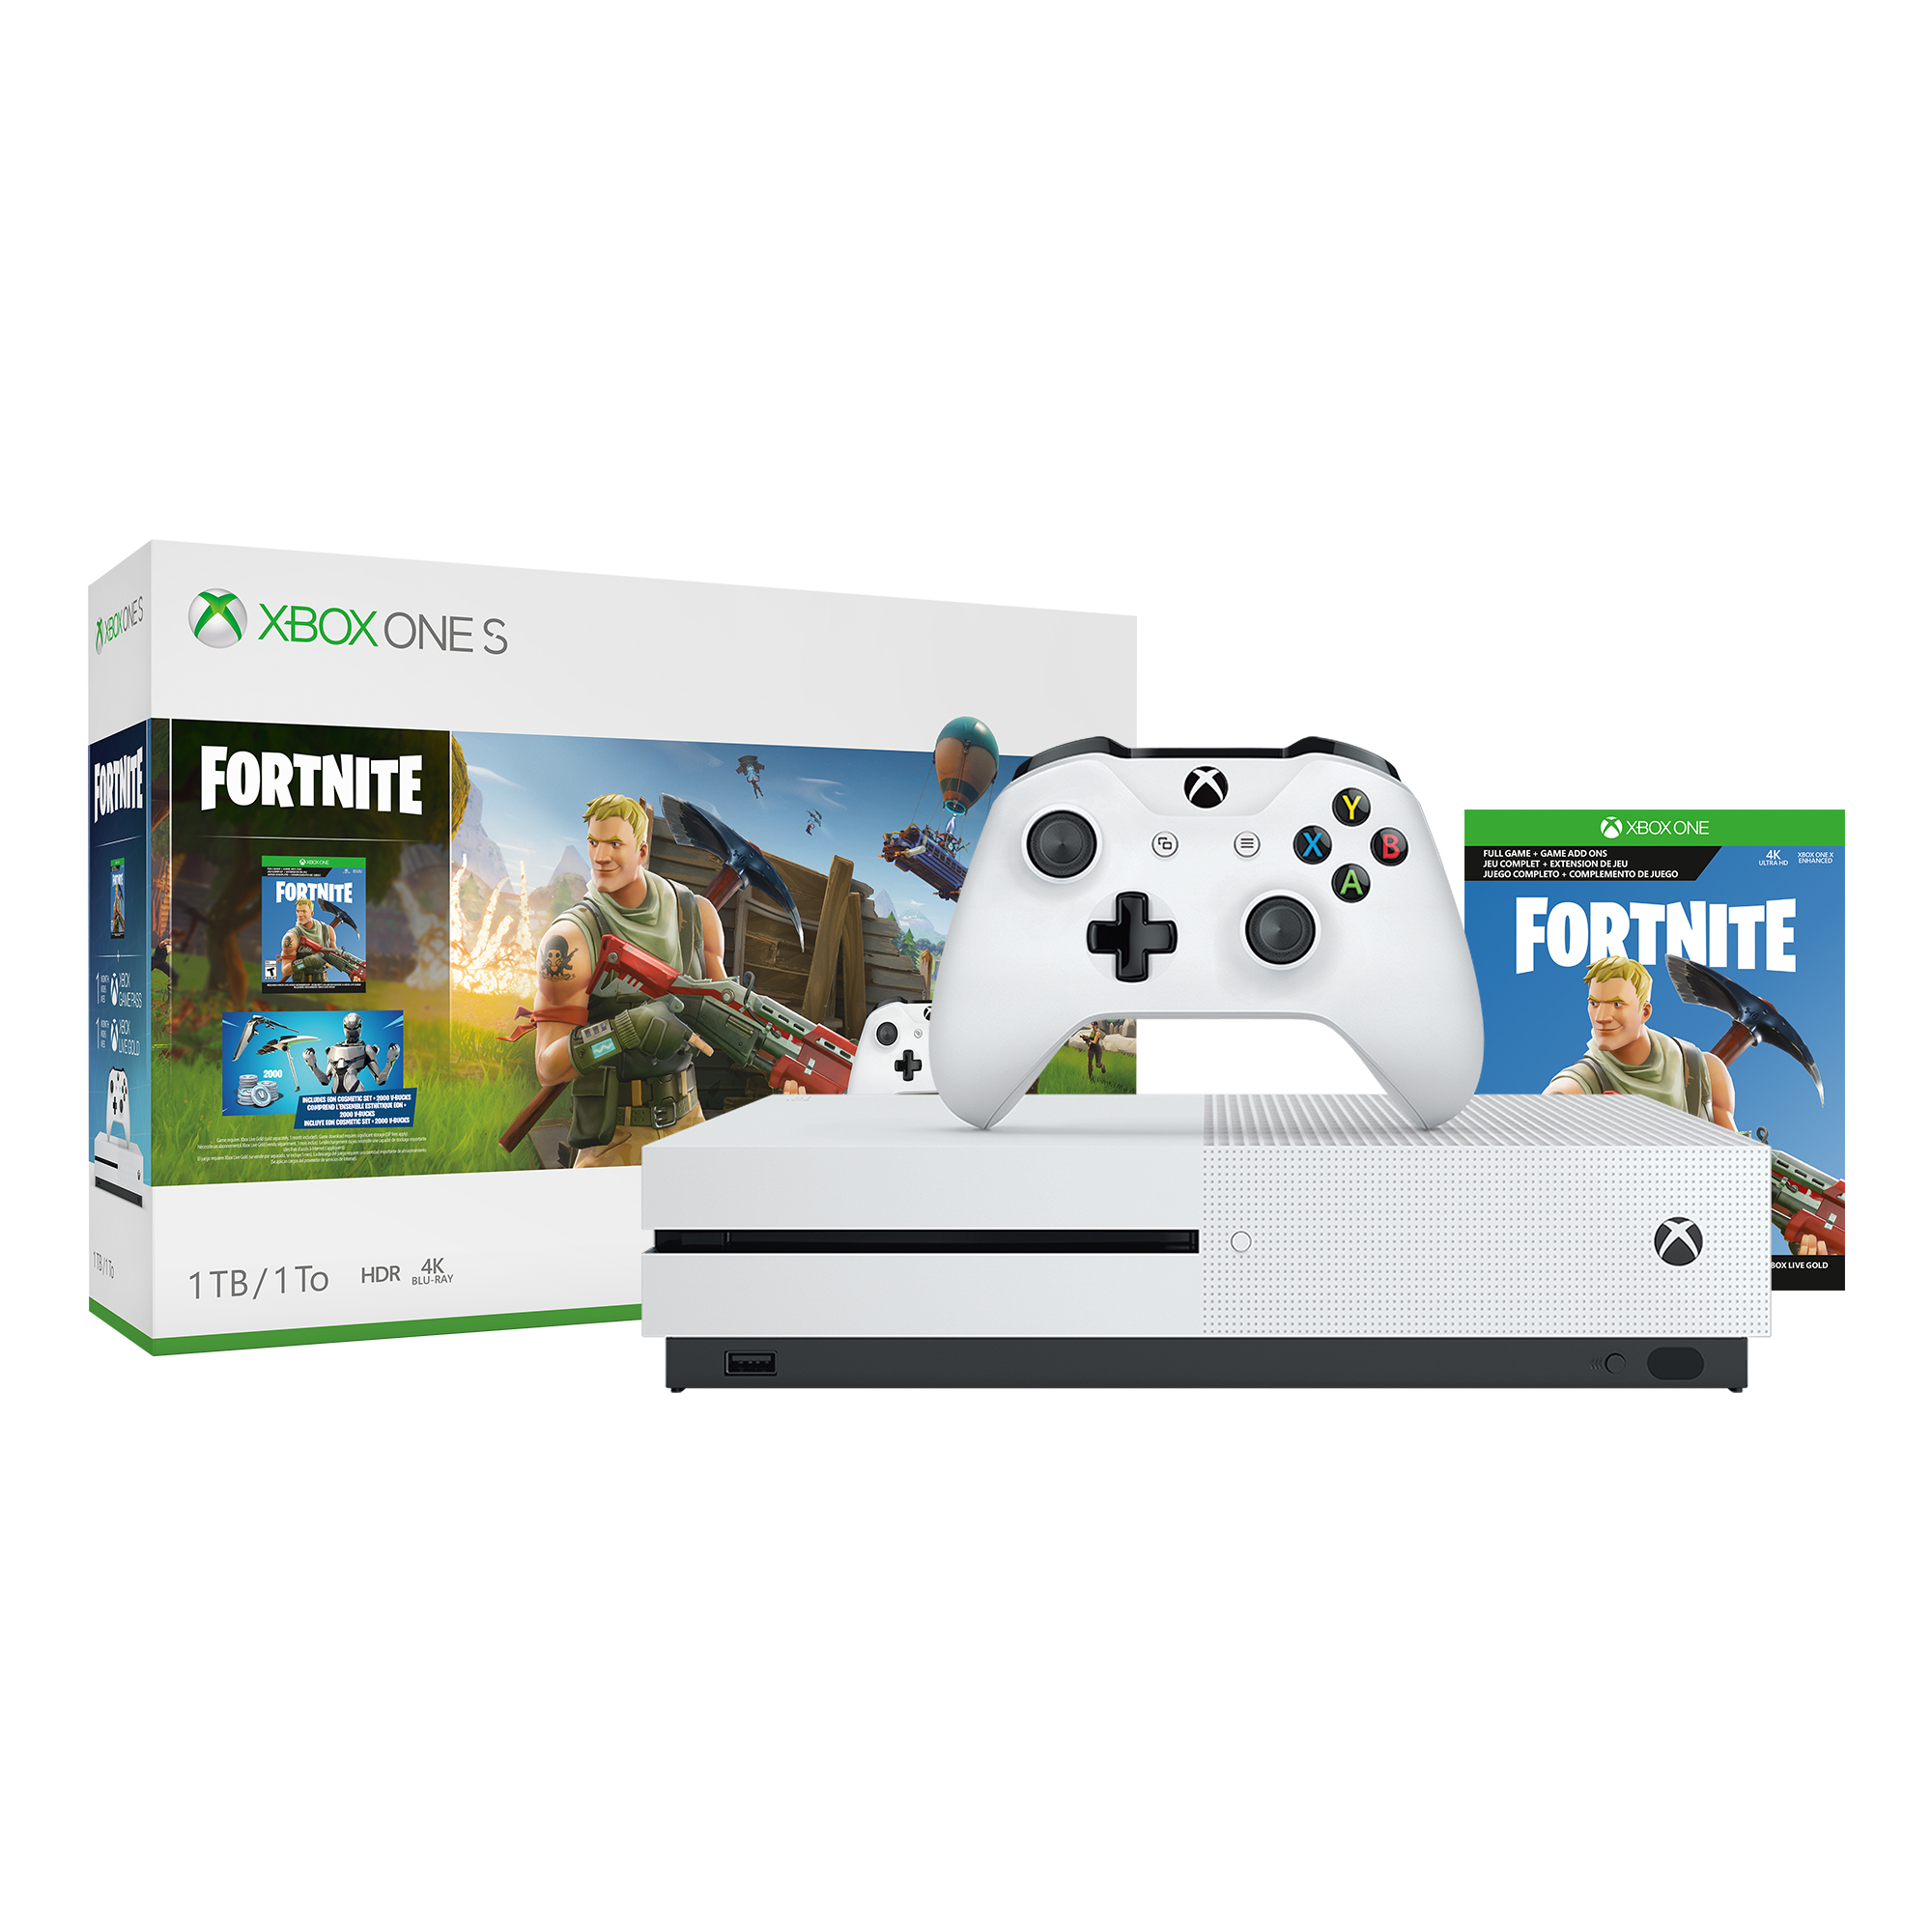 Microsoft Xbox One S 1TB Fortnite Bundle, White, 234-00703 - image 3 of 16